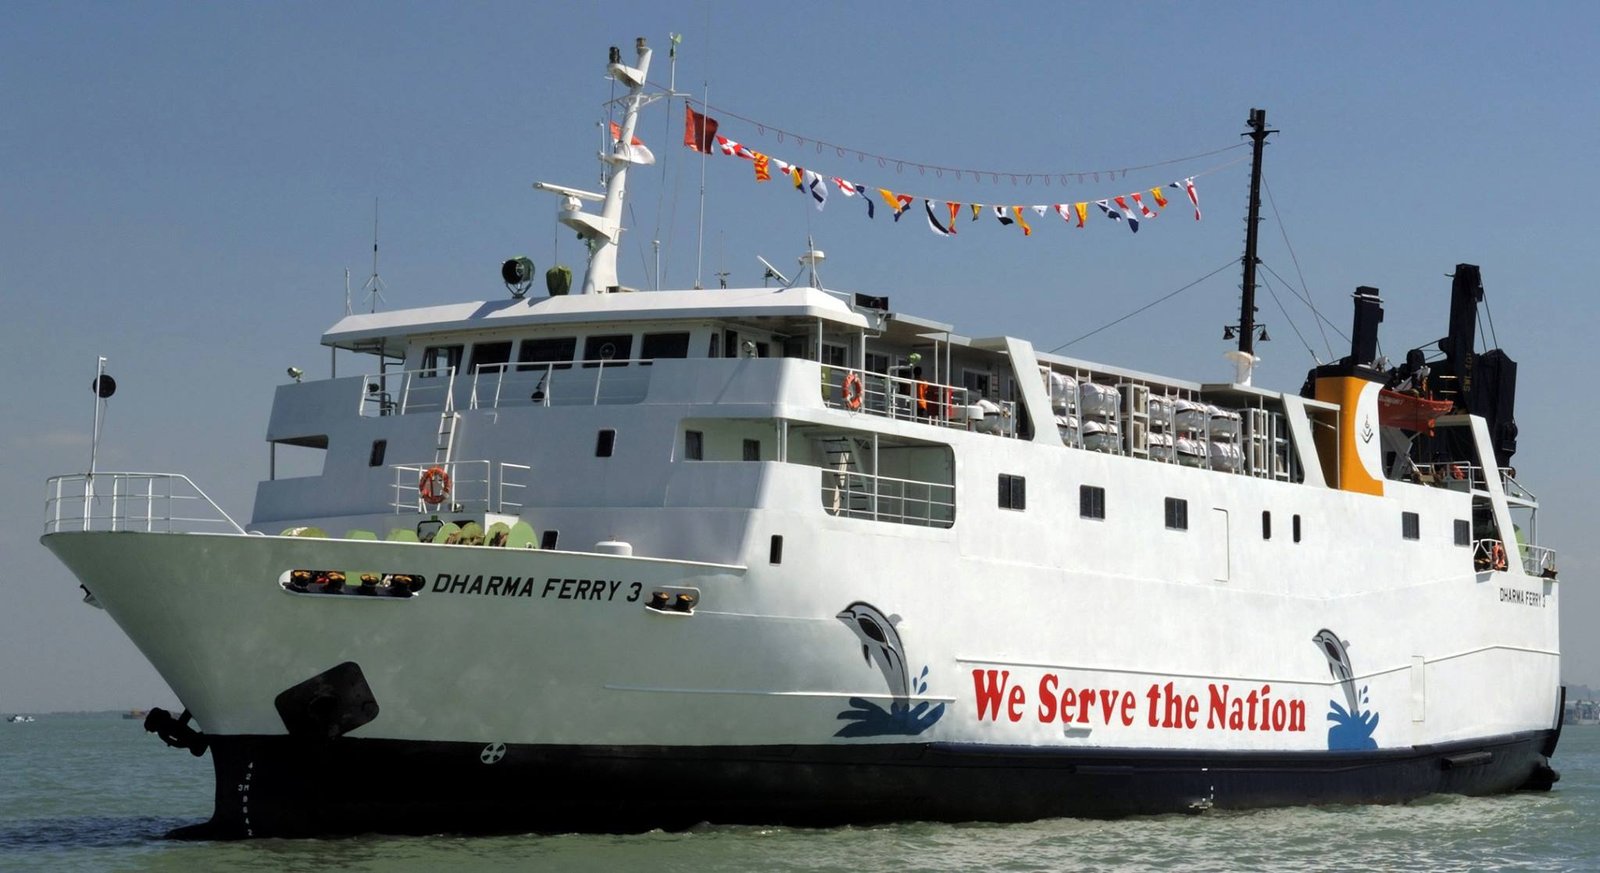 km dharma ferry iii - jadwal kapal laut 2021 batulicin makassar